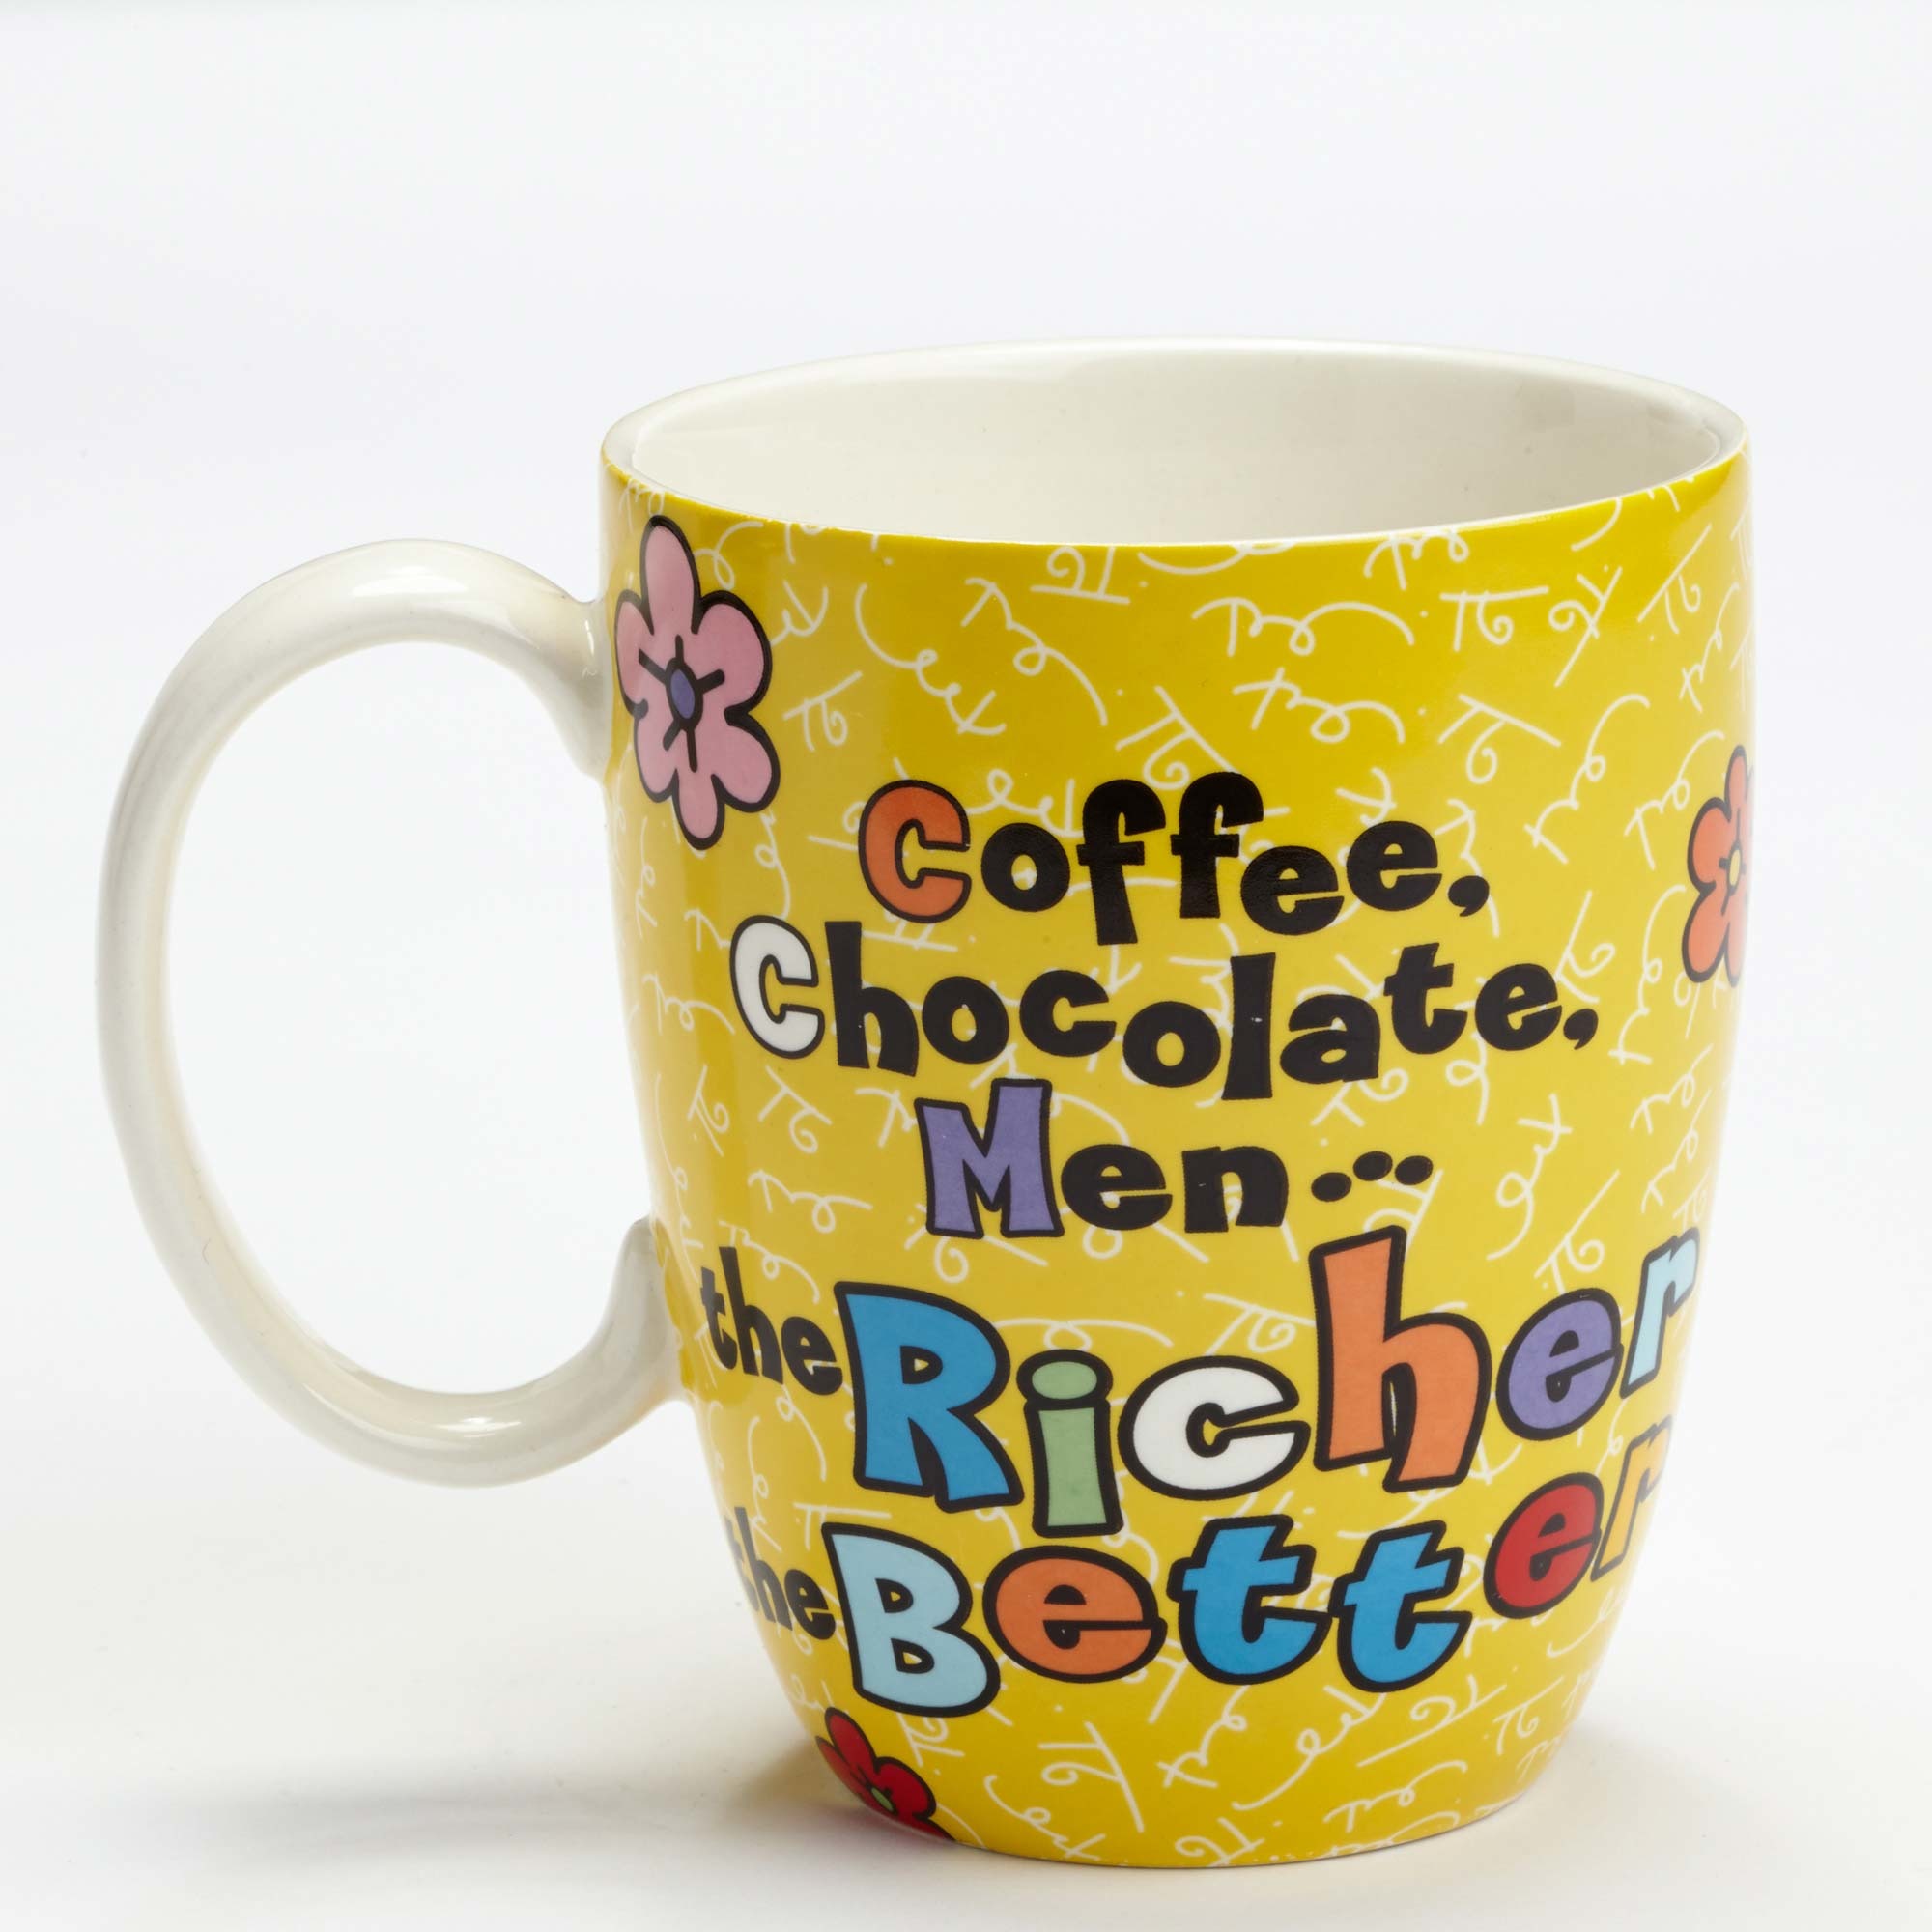 Betty Boop Mug, Unique Artist Gift